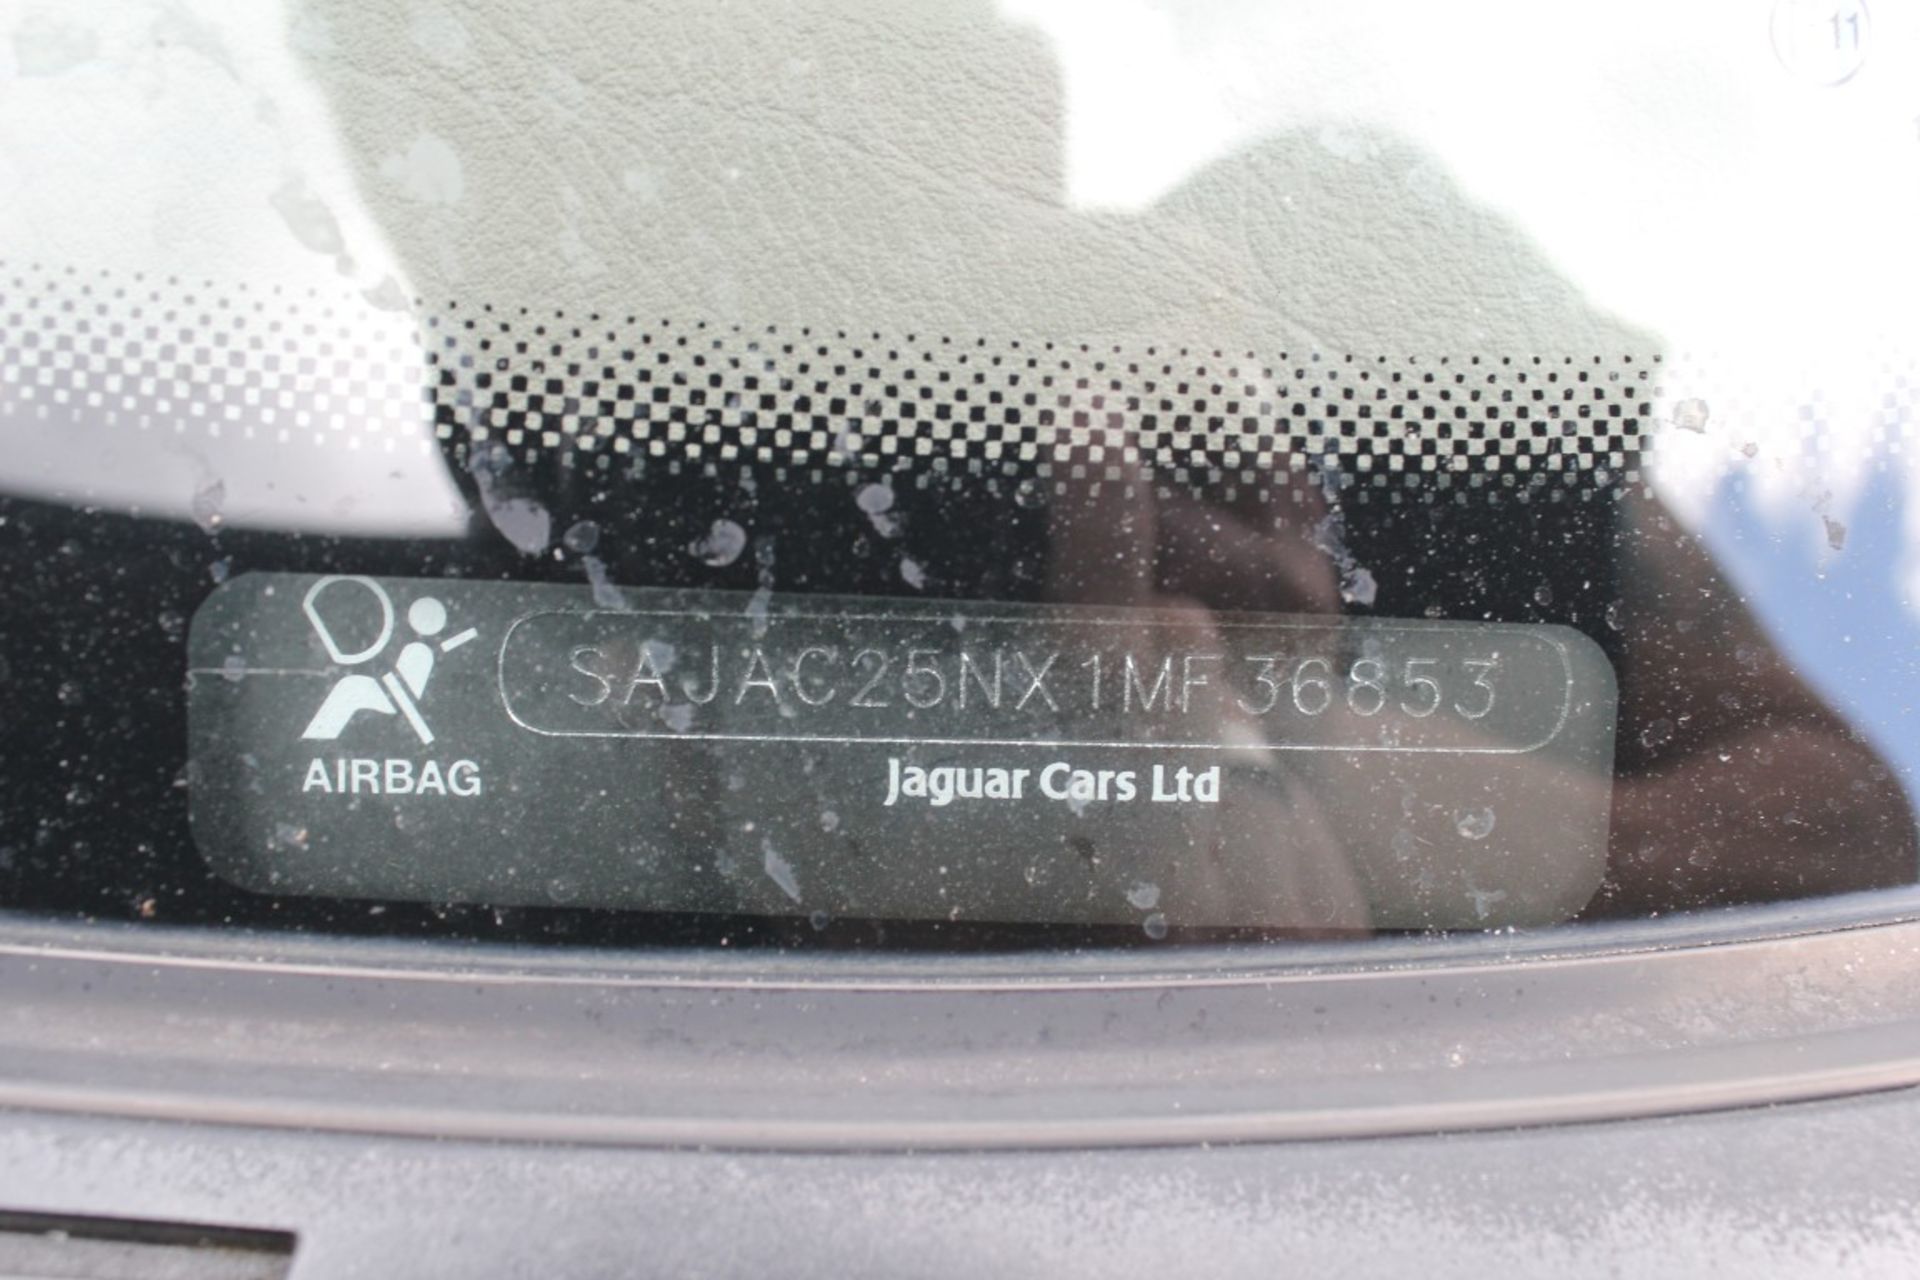 1 x Jaguar Daimler Super V8 Auto 4-Door Saloon - Year 2001 - Blue - Odometer Reading 122,520 - MOT - Image 27 of 77